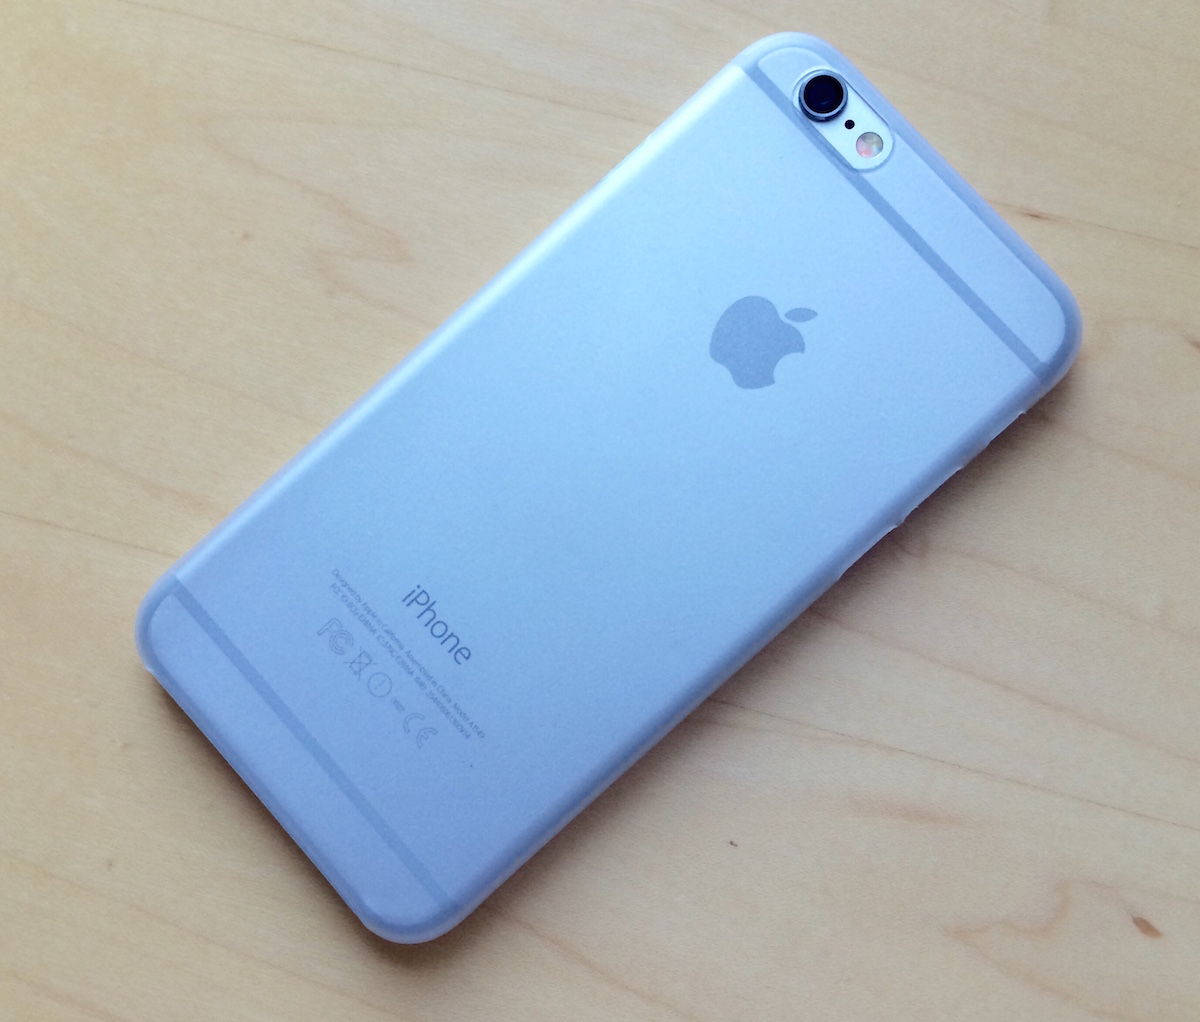 Scarf Minimalist Ultrathin case for iPhone 6